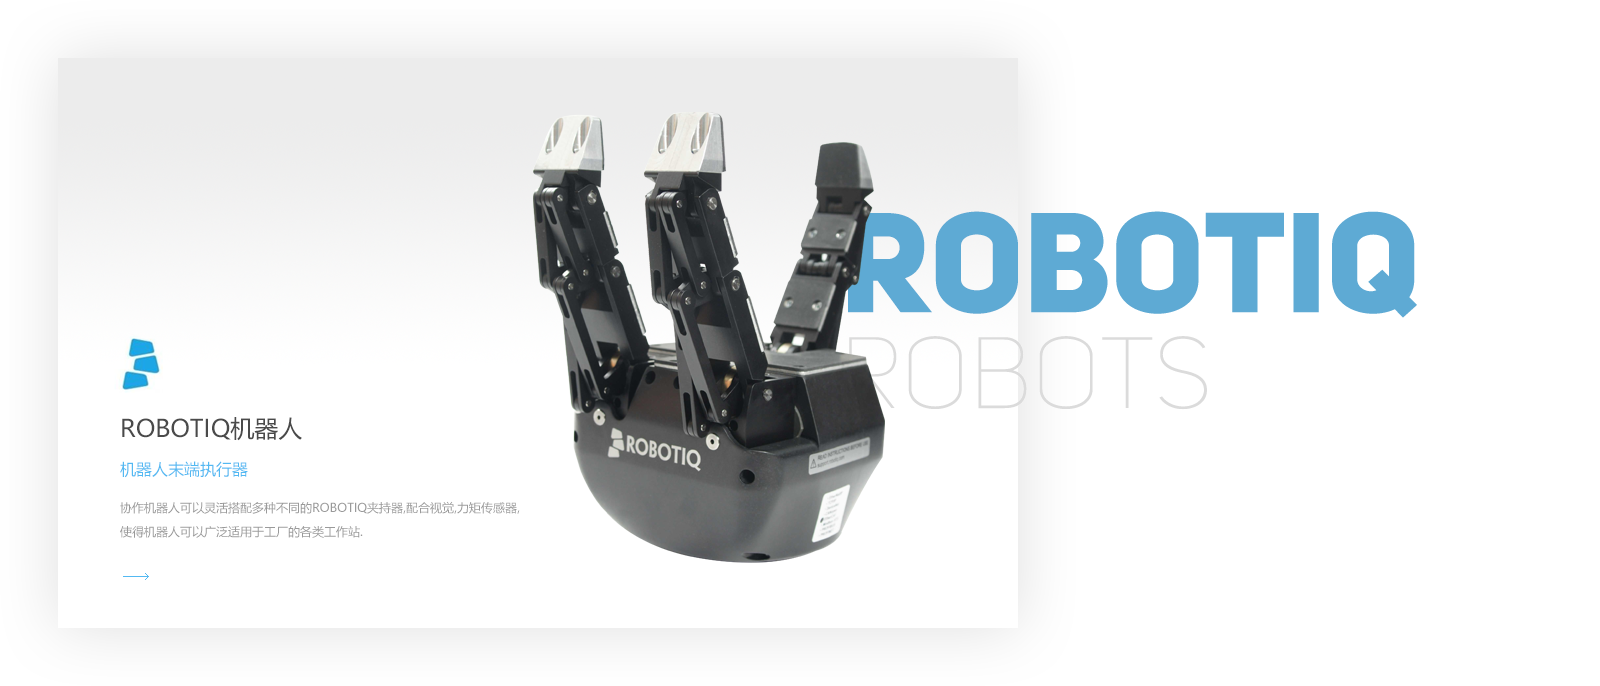 robotiq,机器人末端,协作机器人,移动机器人,mir机器人,ur机器人,吸盘,夹爪,优傲,mir,ur